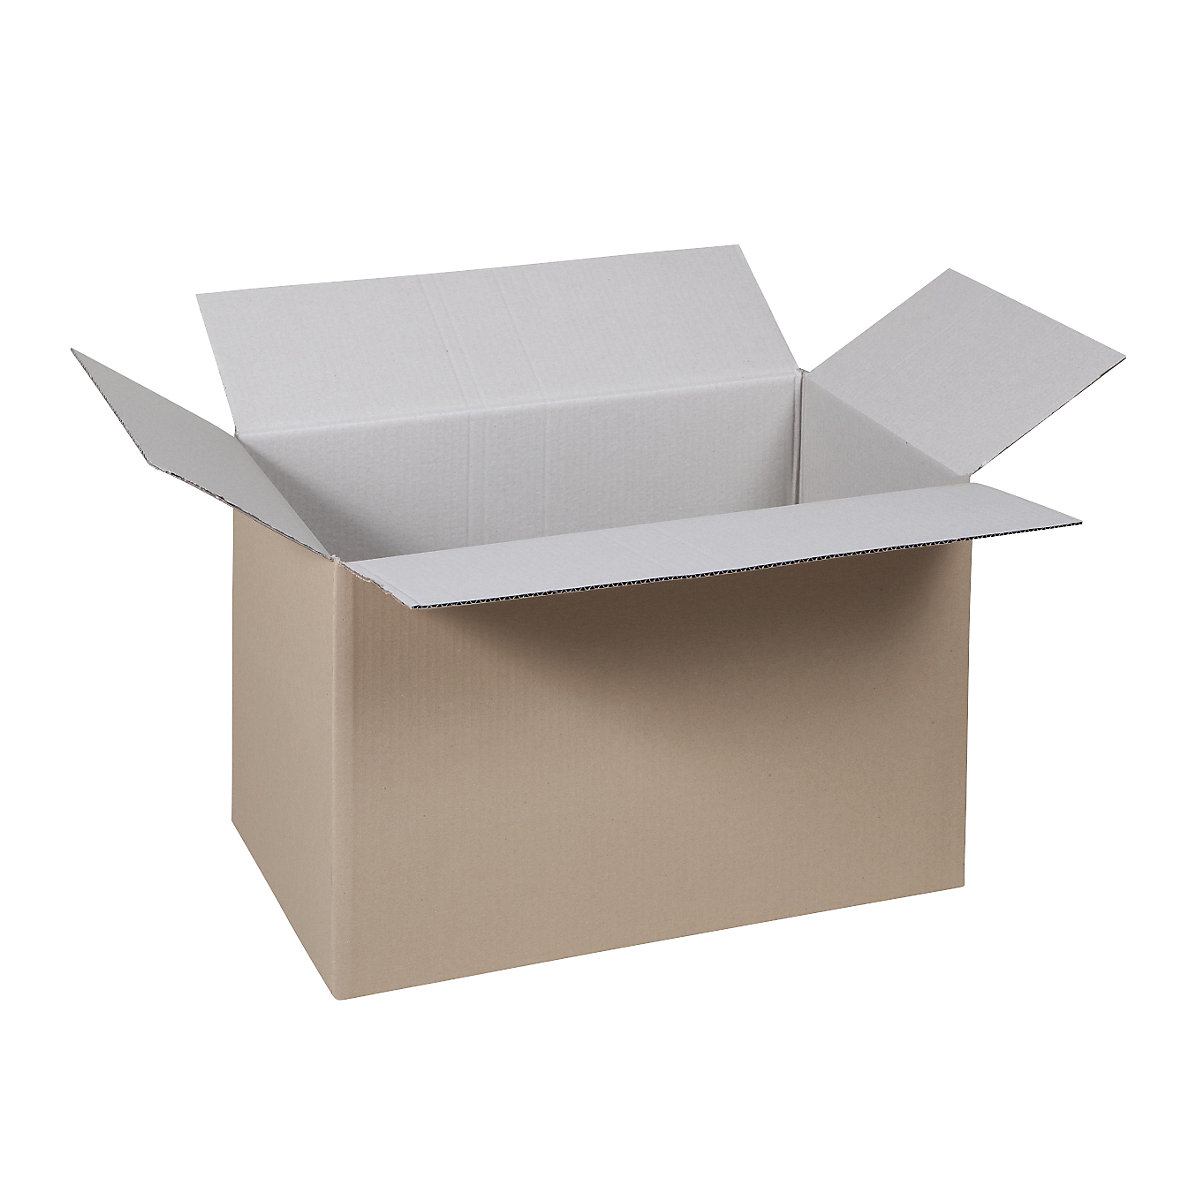 Folding cardboard box, FEFCO 0201, made of single fluted cardboard, internal dimensions 550 x 330 x 350 mm, pack of 50-13